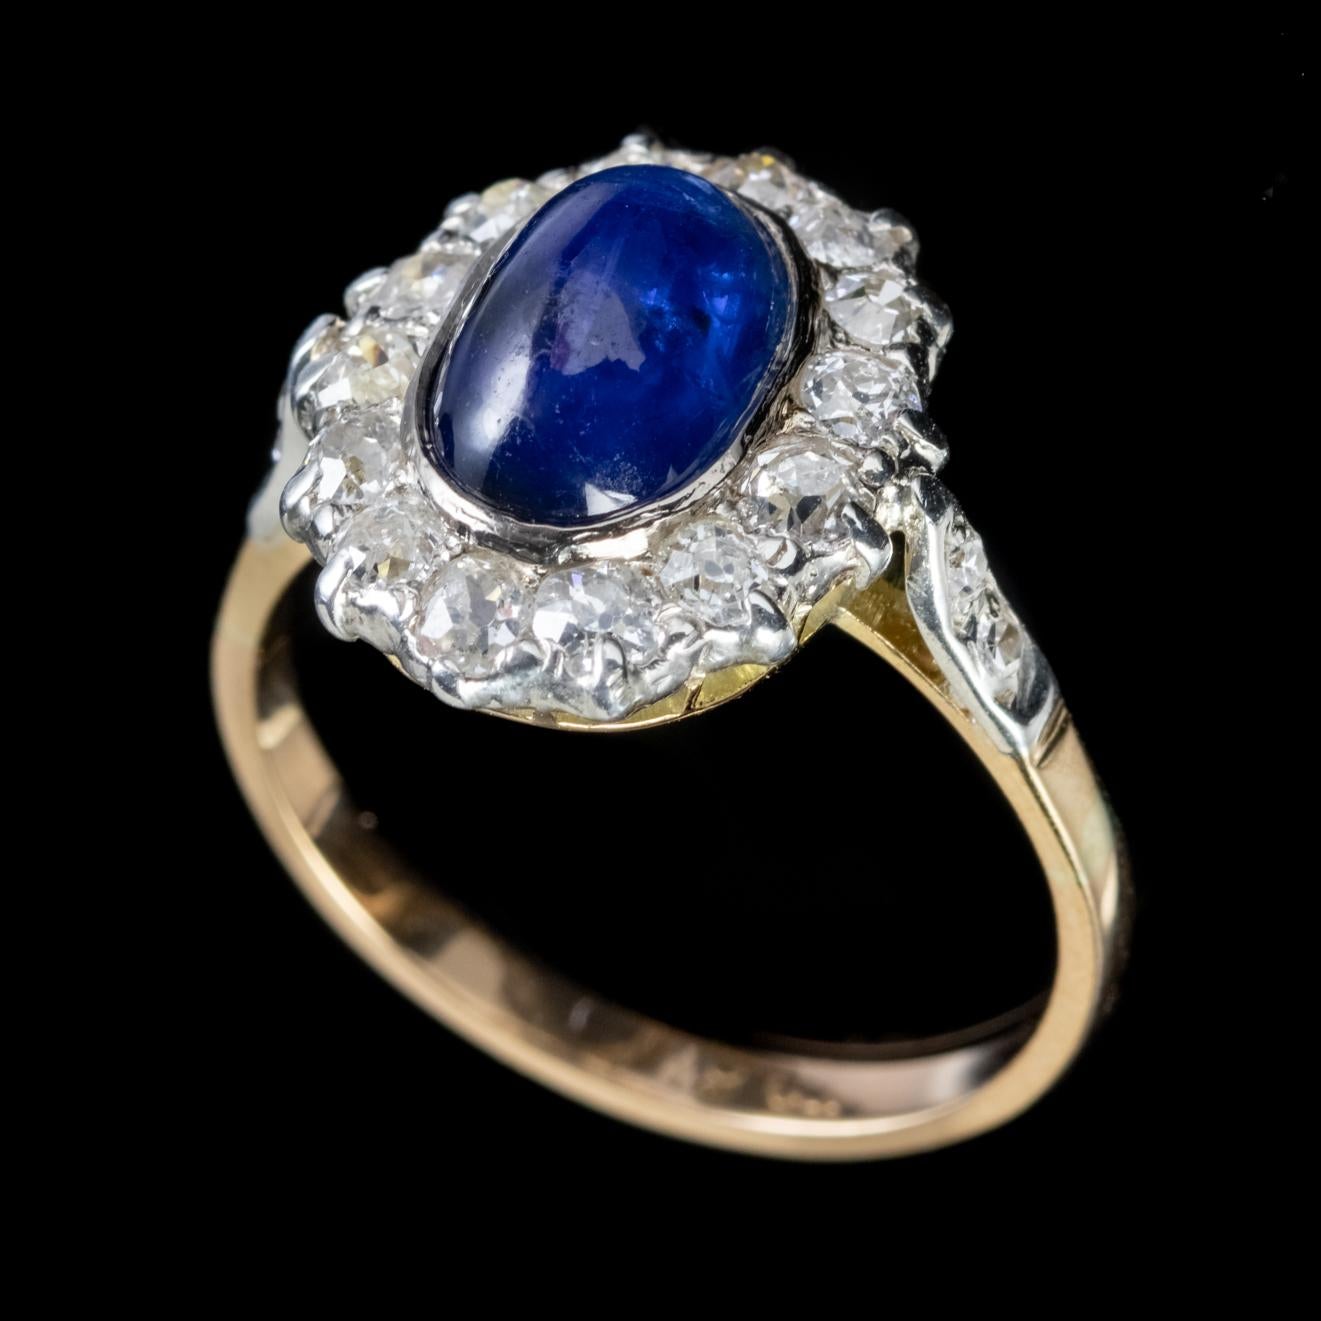 Antique Victorian Cabochon Sapphire Diamond Ring 18 Carat Gold, circa 1880 For Sale 2